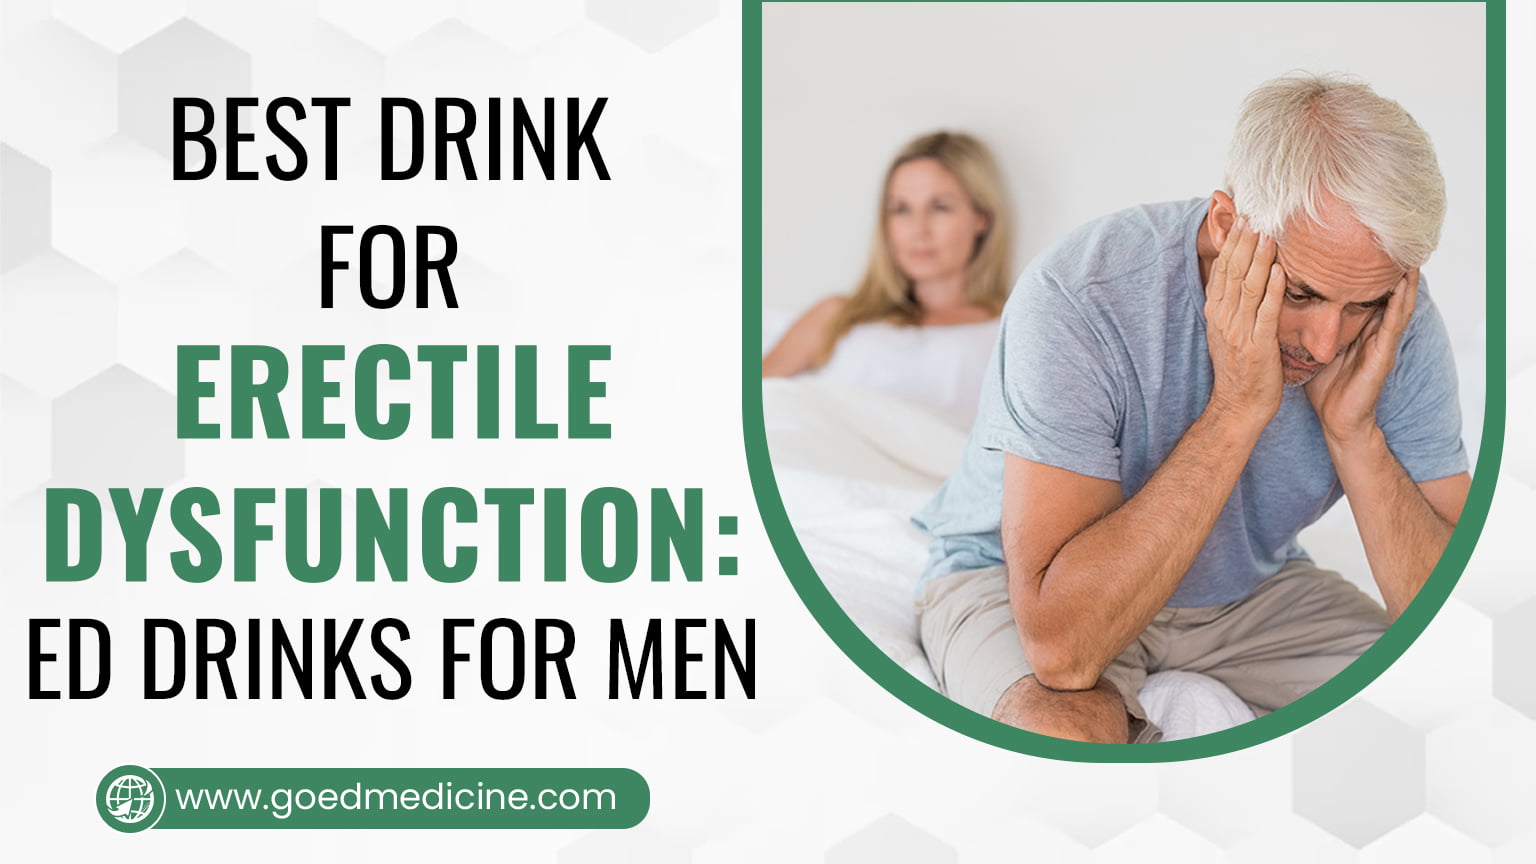 Best Drink for Erectile Dysfunction ED Drinks for Men